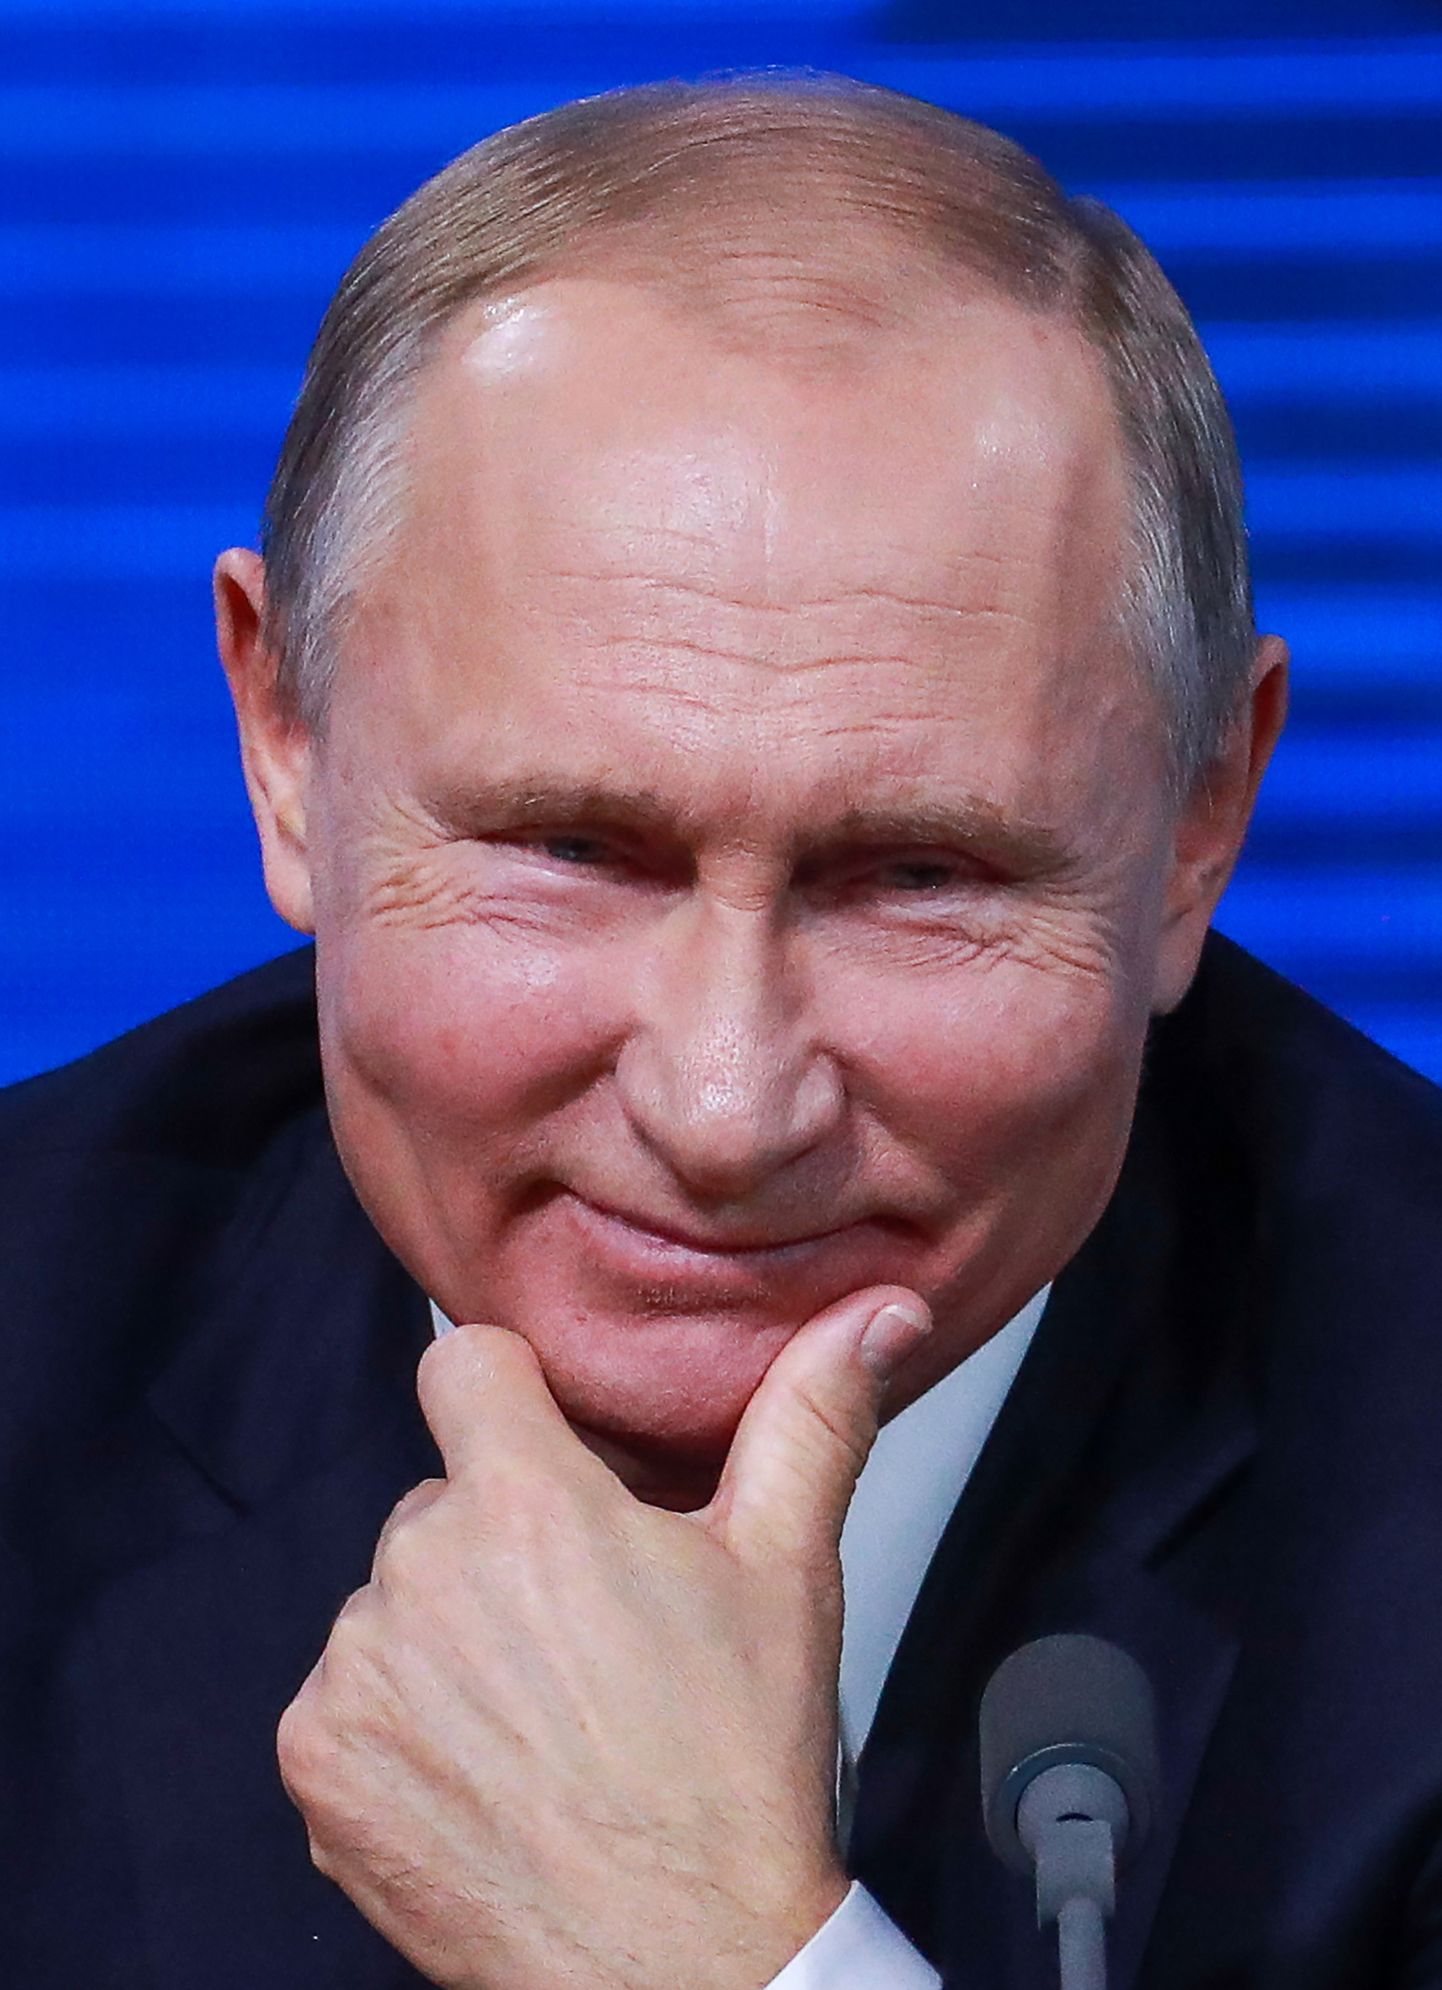 Venemaa president Vladimir Putin 20. detsembril 2018 suurel pressikonverentsil